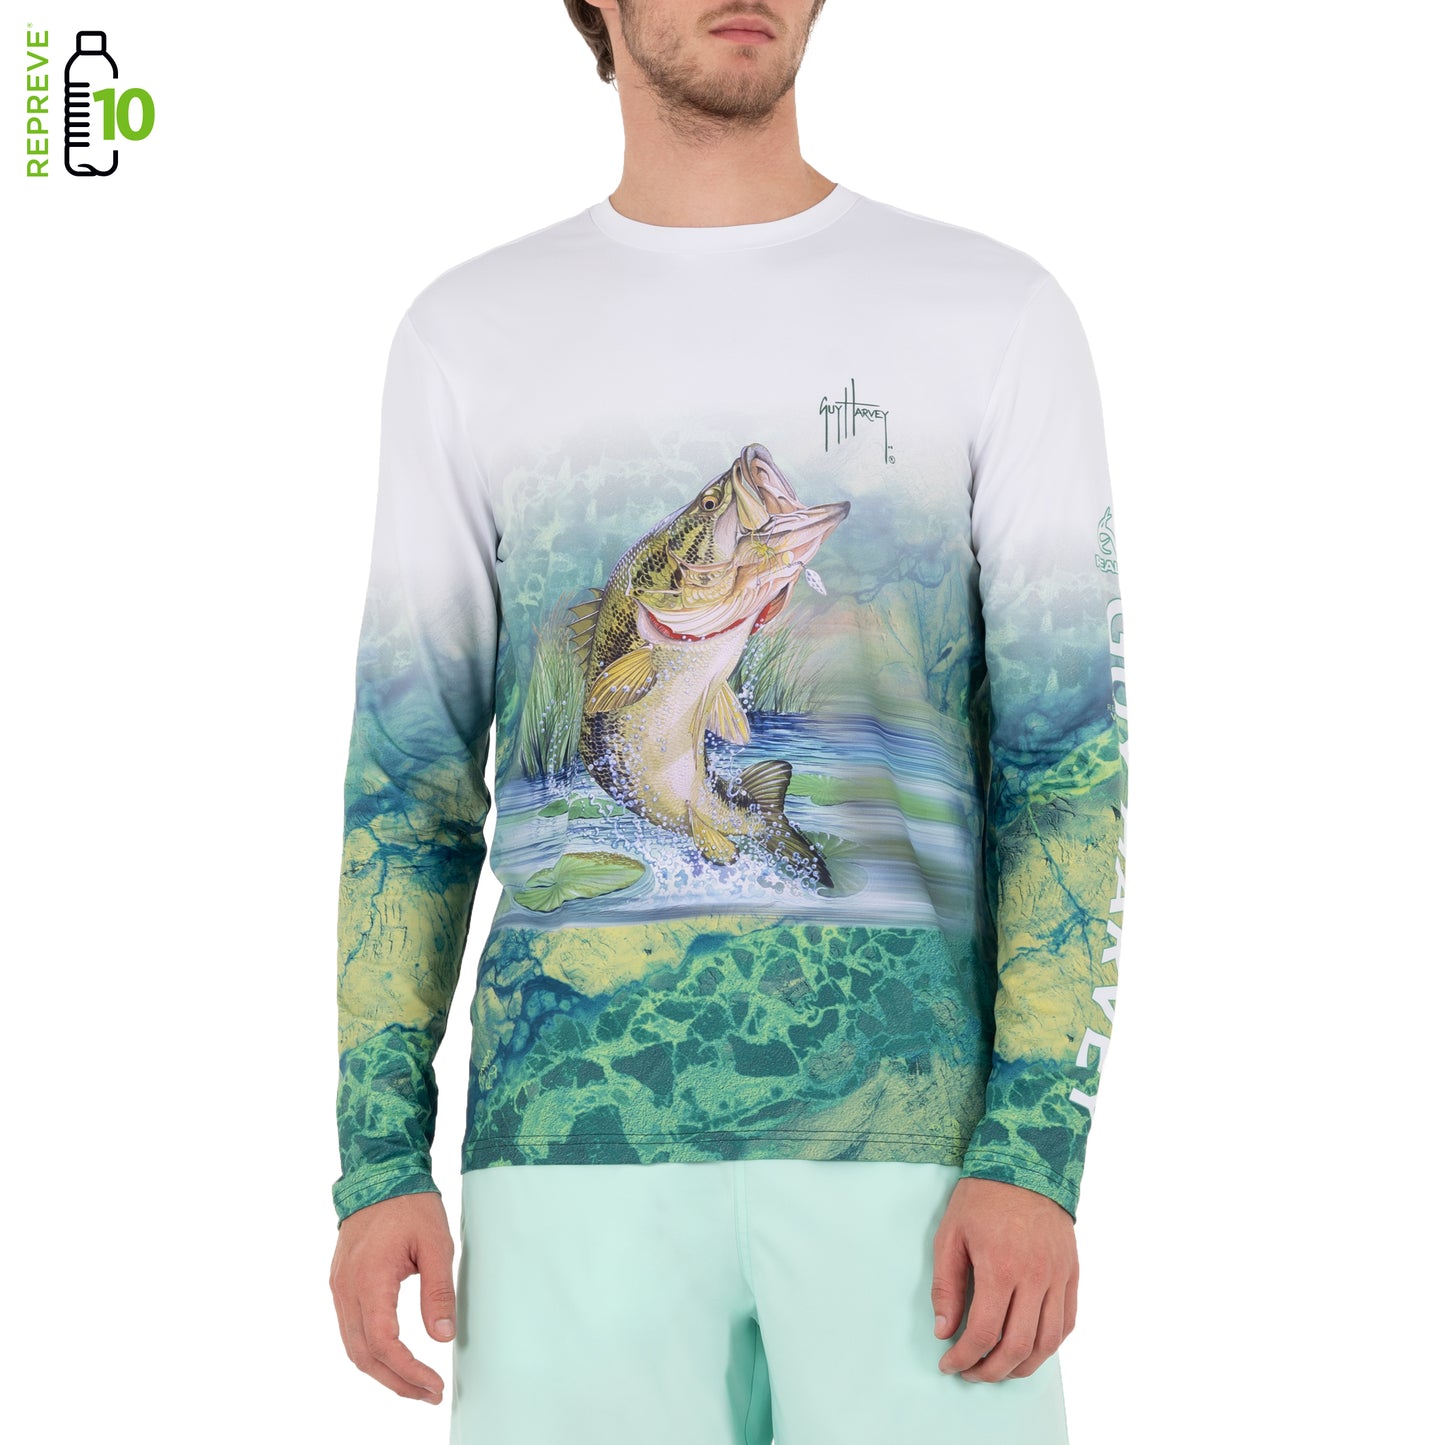 Bass Camo The Vet Fishing Shirt performance short sleeve t-shirt fea